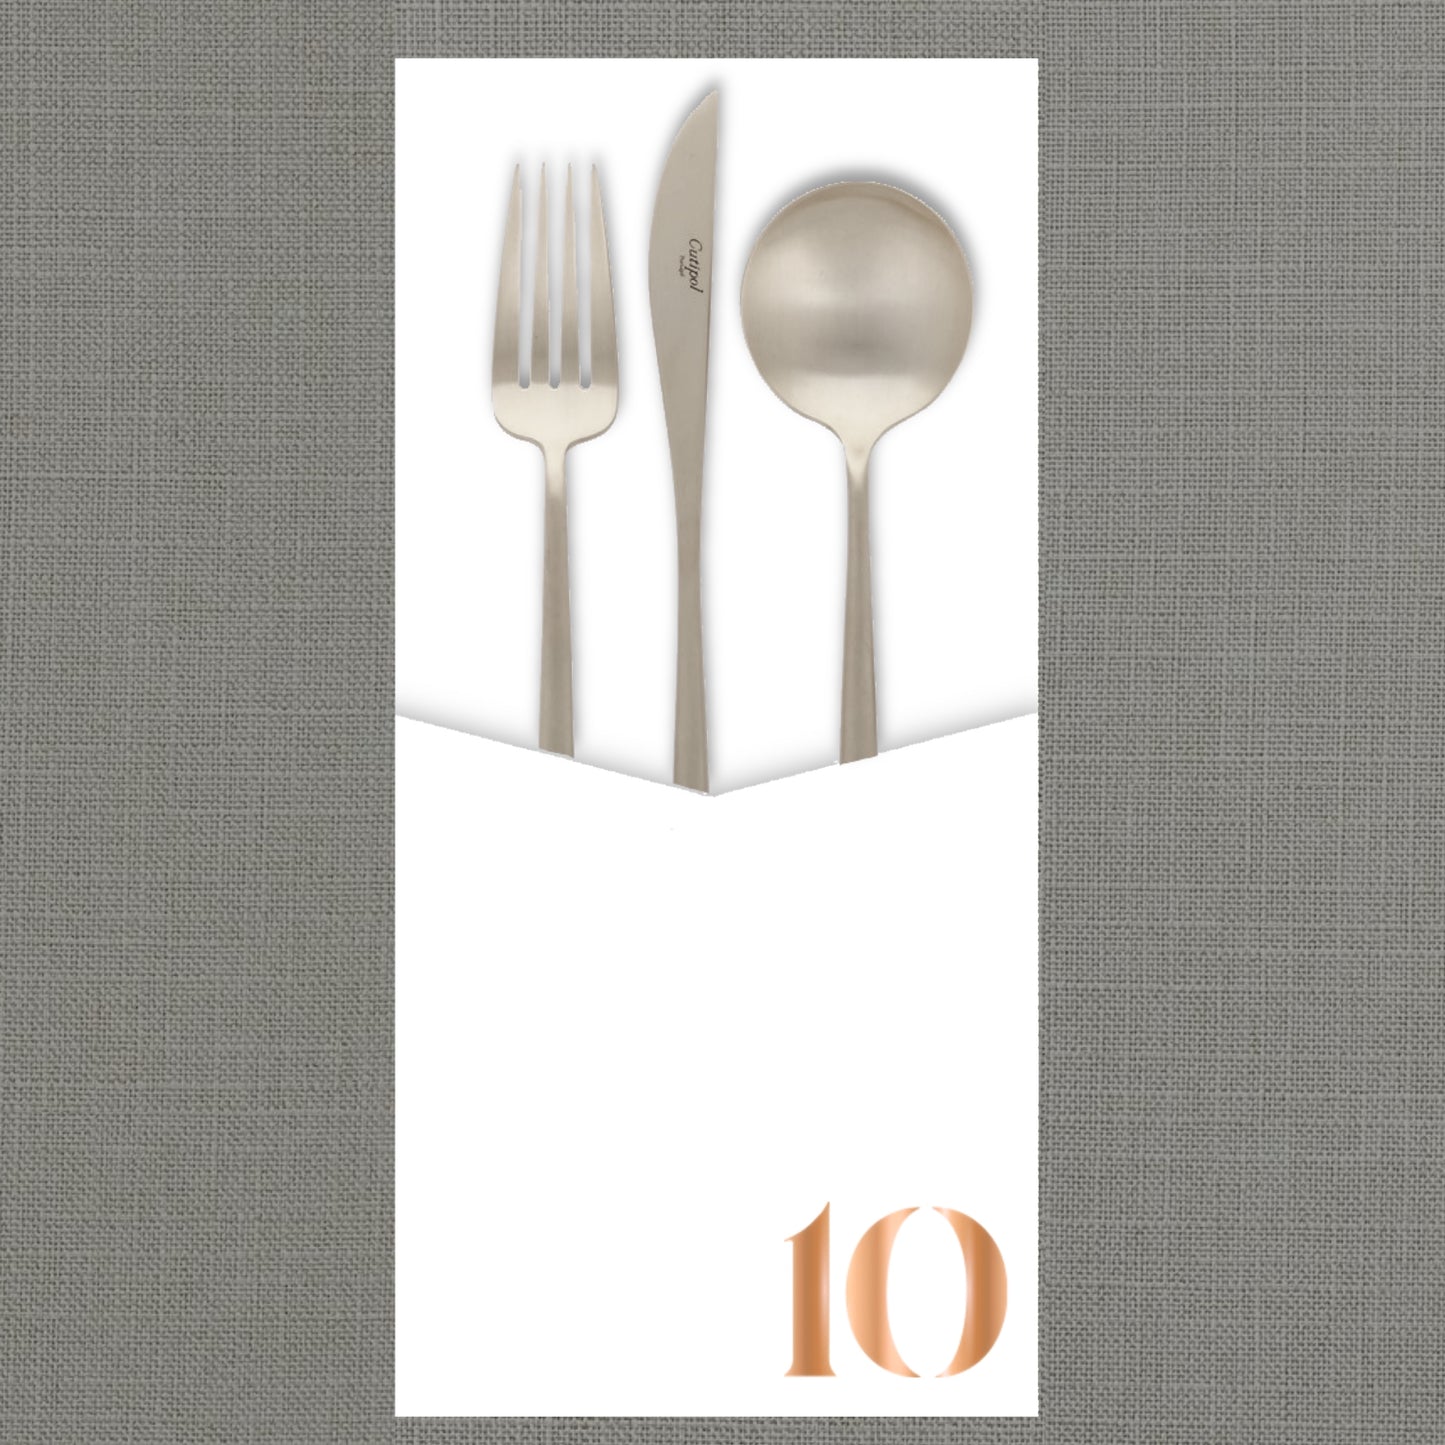 Foil Celebrate! 10 - Cutlery Pouch